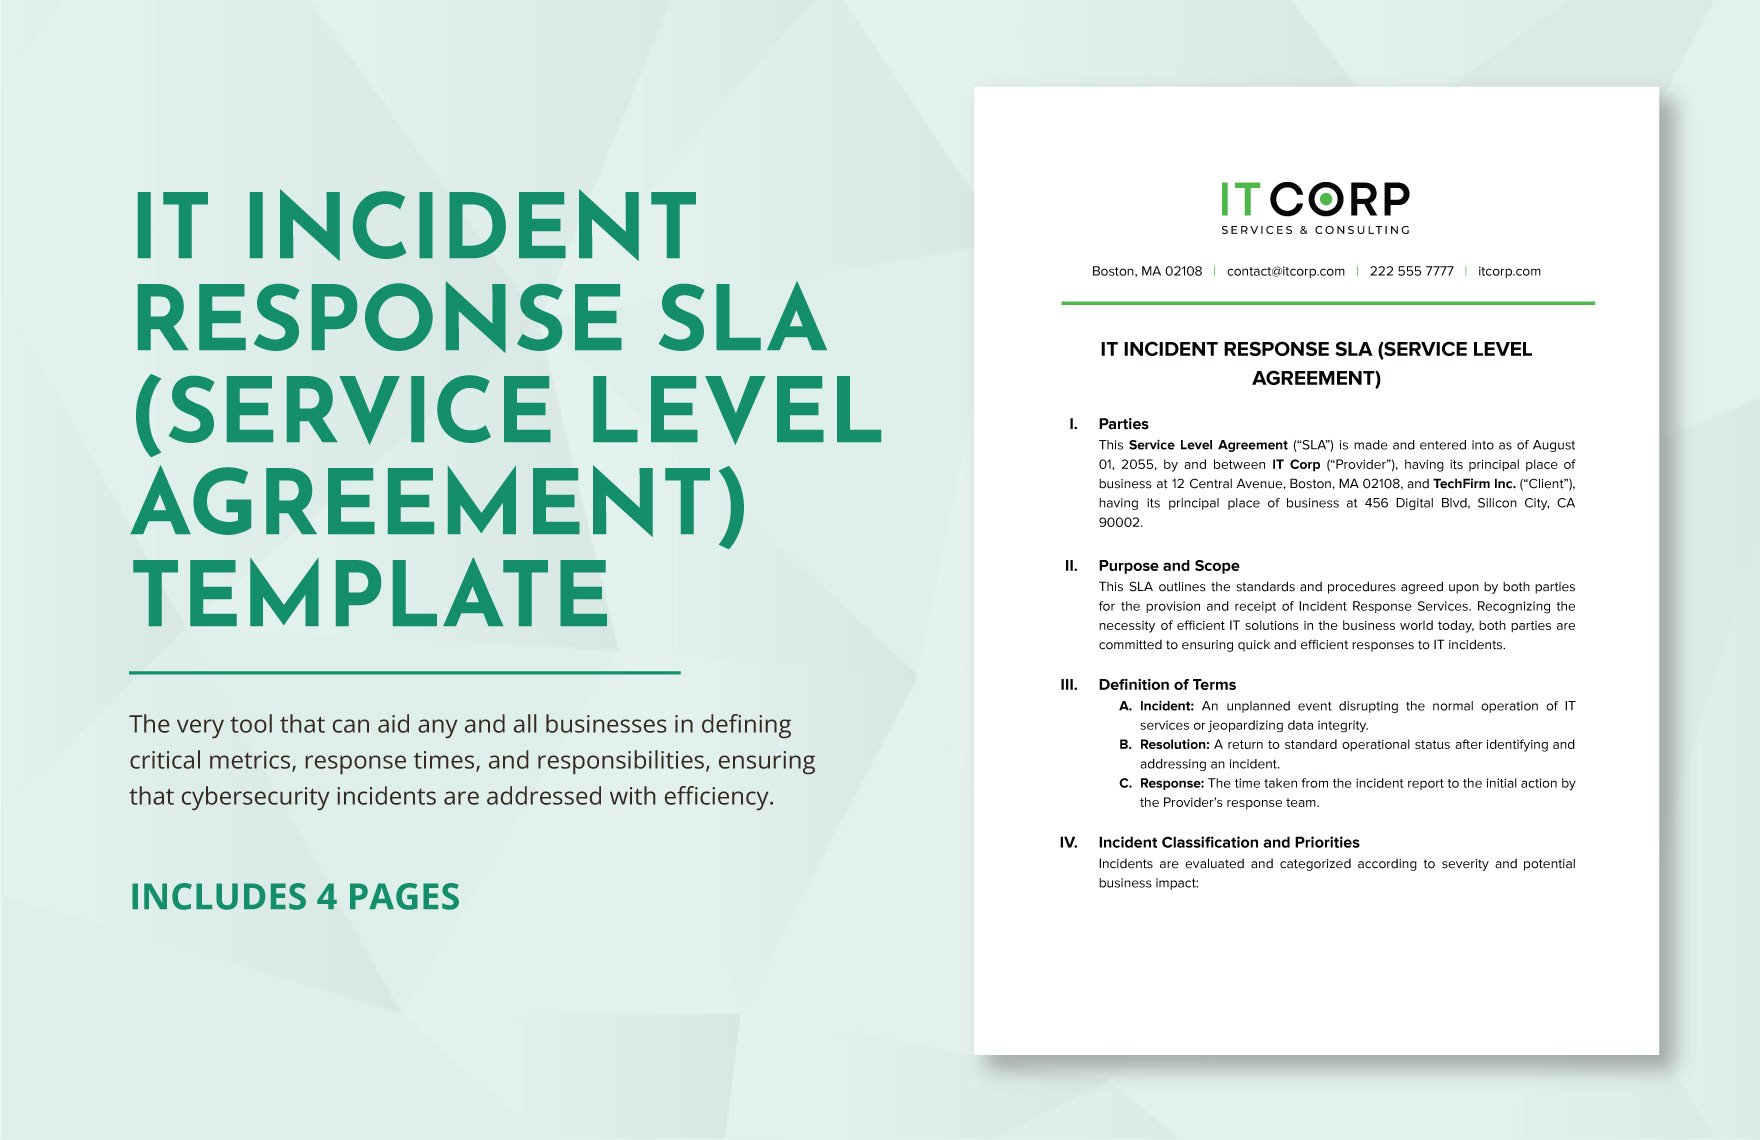 IT Incident Response SLA (Service Level Agreement) Template